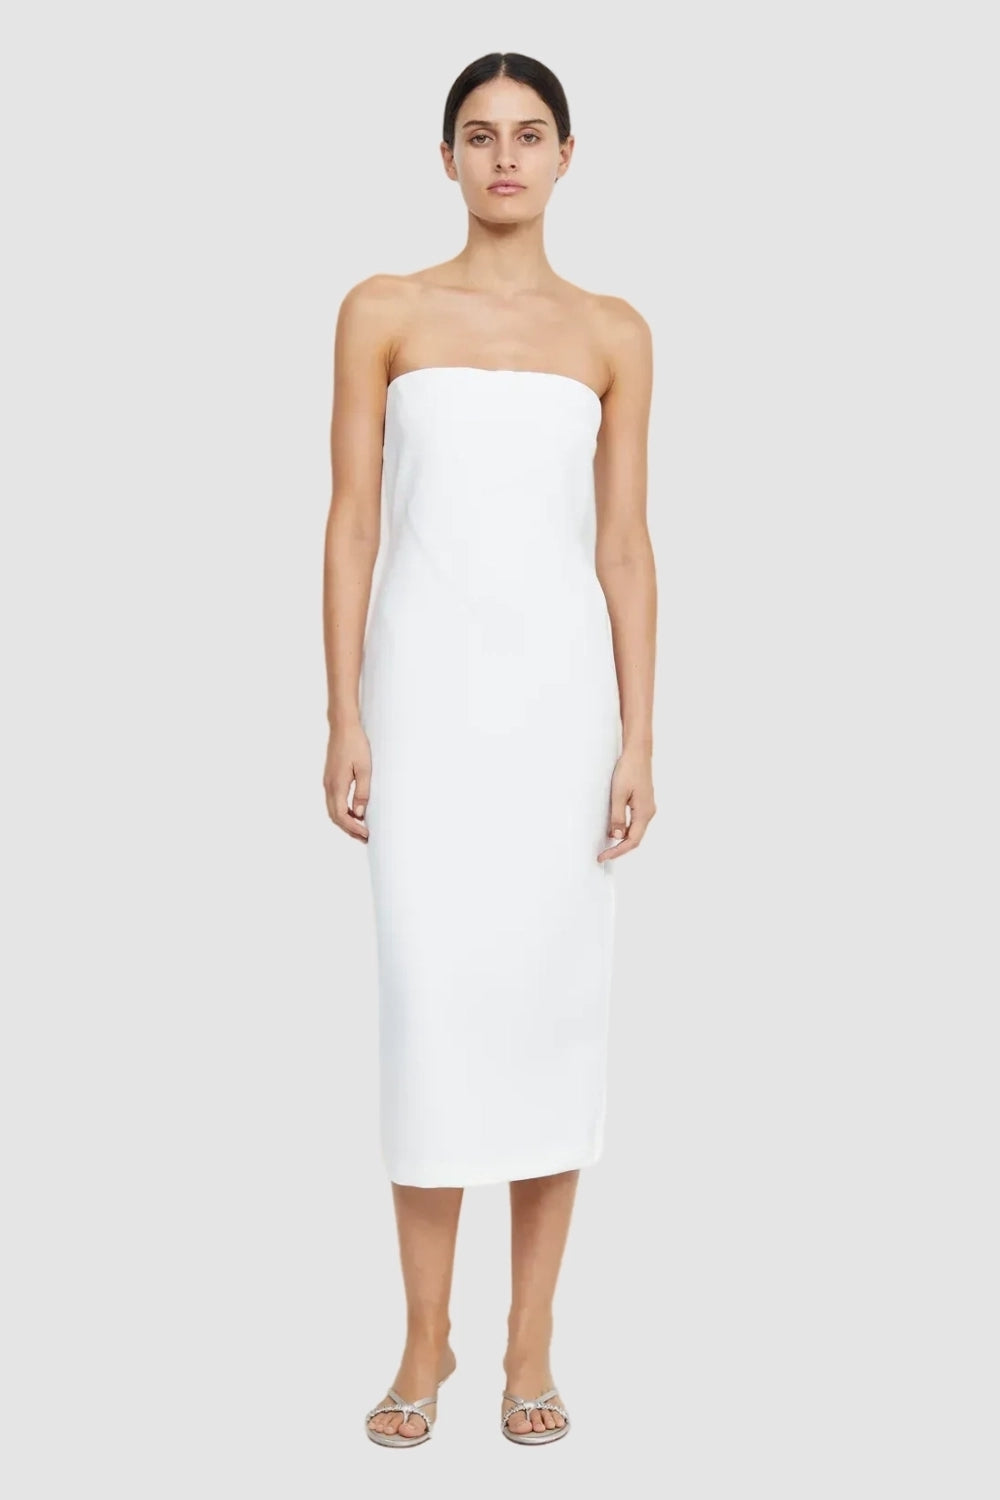 Earthscape White Dress